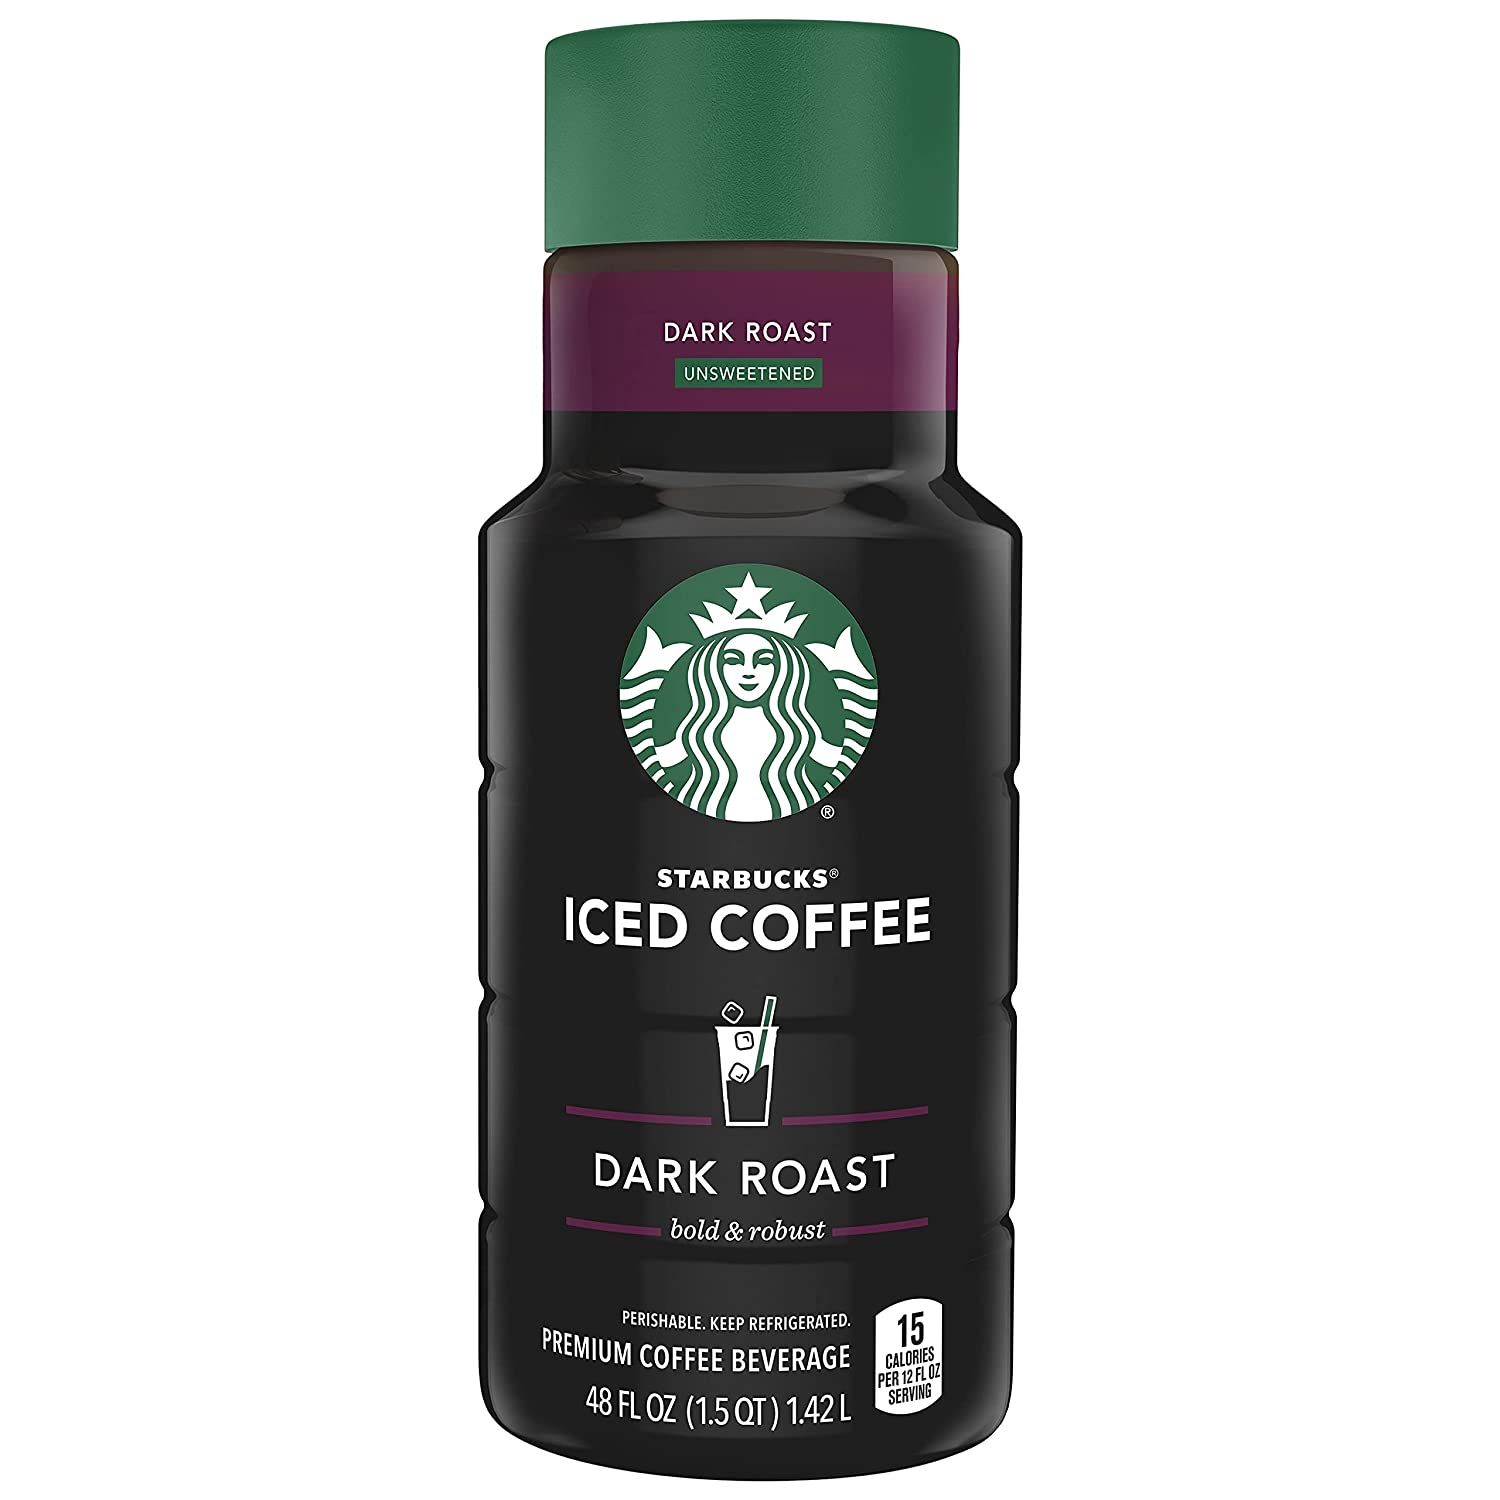 Starbucks, Dark Roast Iced Coffee, 48 fl oz. bottle